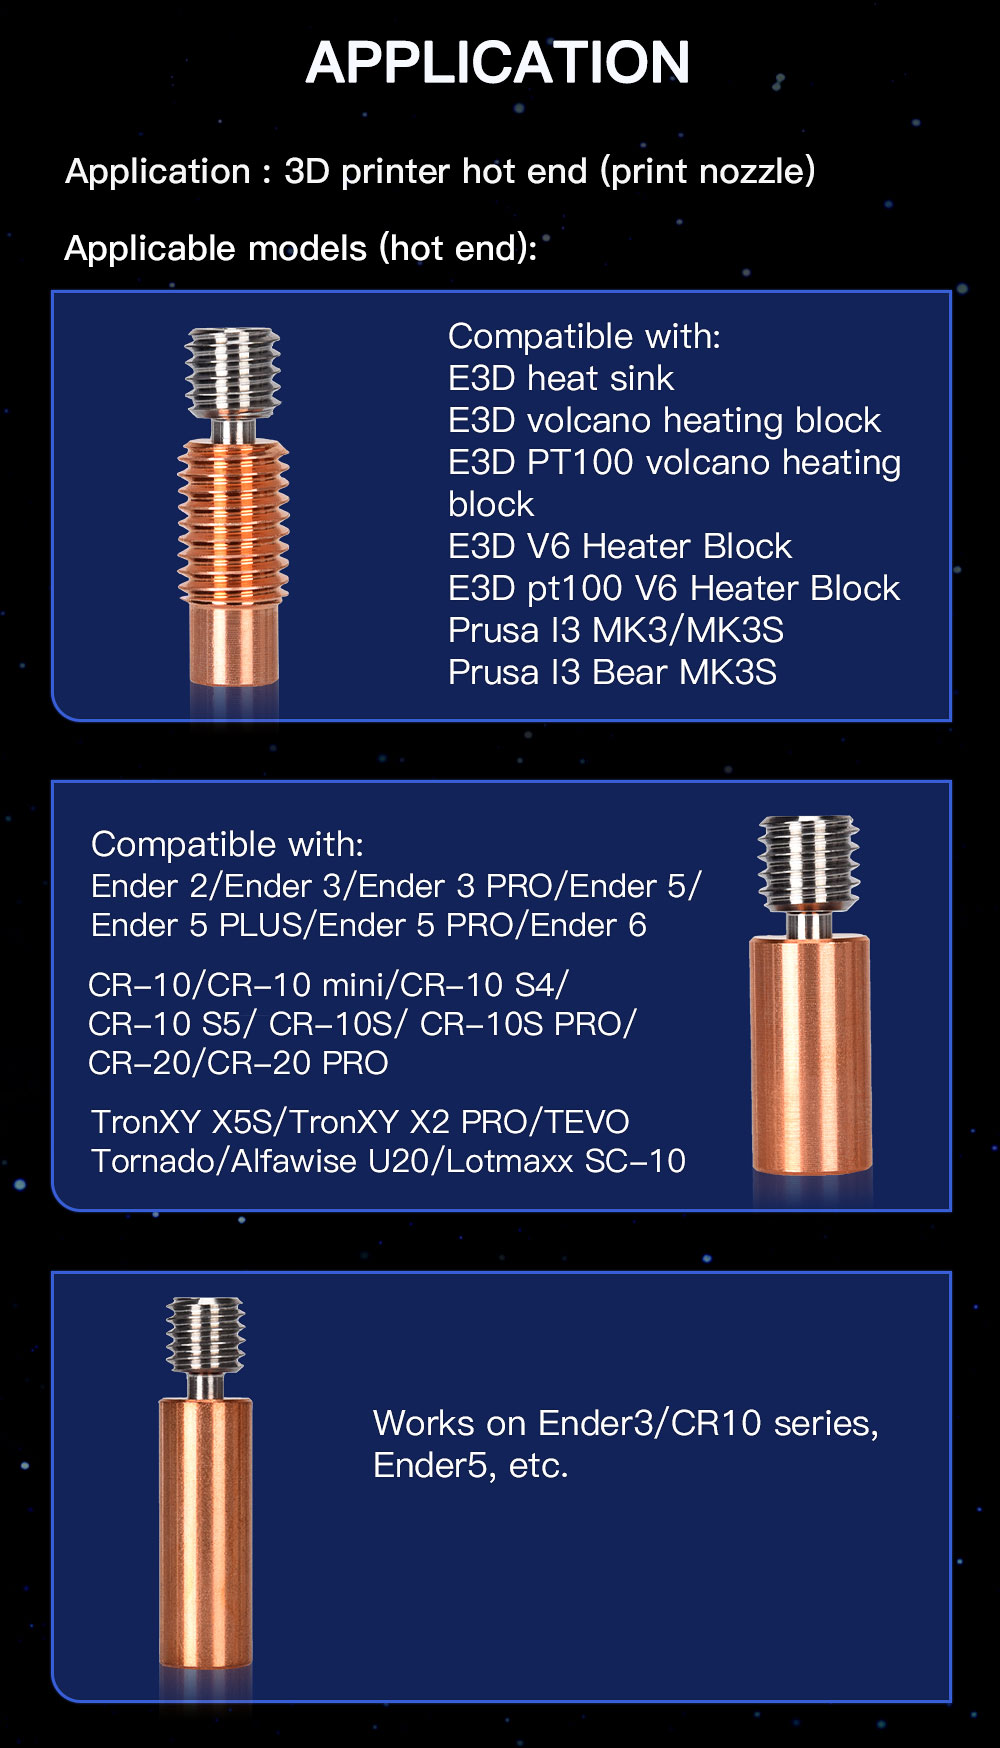 BIGTREETECH® Bi-metal Heatbreak Copper Titanium Alloy Throat V6 Remote/Ender3 Series/Water-cooled Version for For PT100 V6 Volcano Hotend Block Prusa i3 MK3 3D Printer